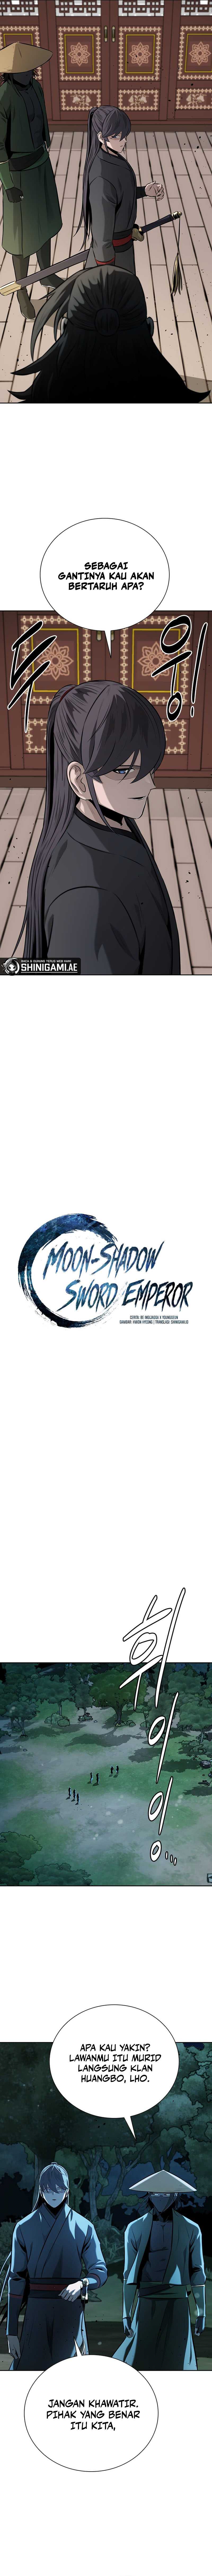 Moon-Shadow Sword Emperor Chapter 60 Image 7